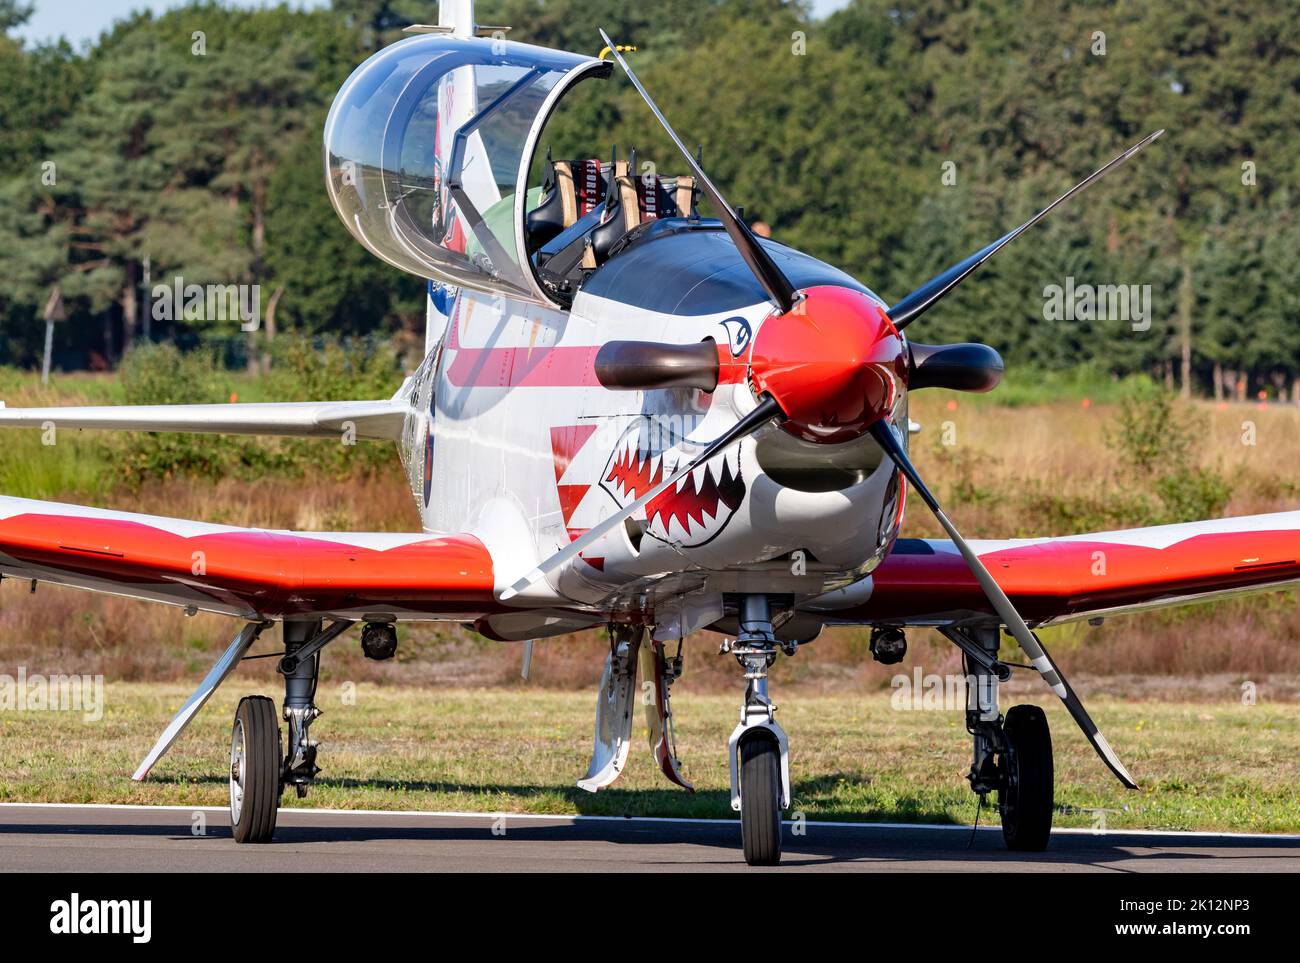 Croatian Air Force Pilatus PC-9 trainer plane taxiing at Kleine-Brogel airbase. Belgium - September 14, 2019 Stock Photo